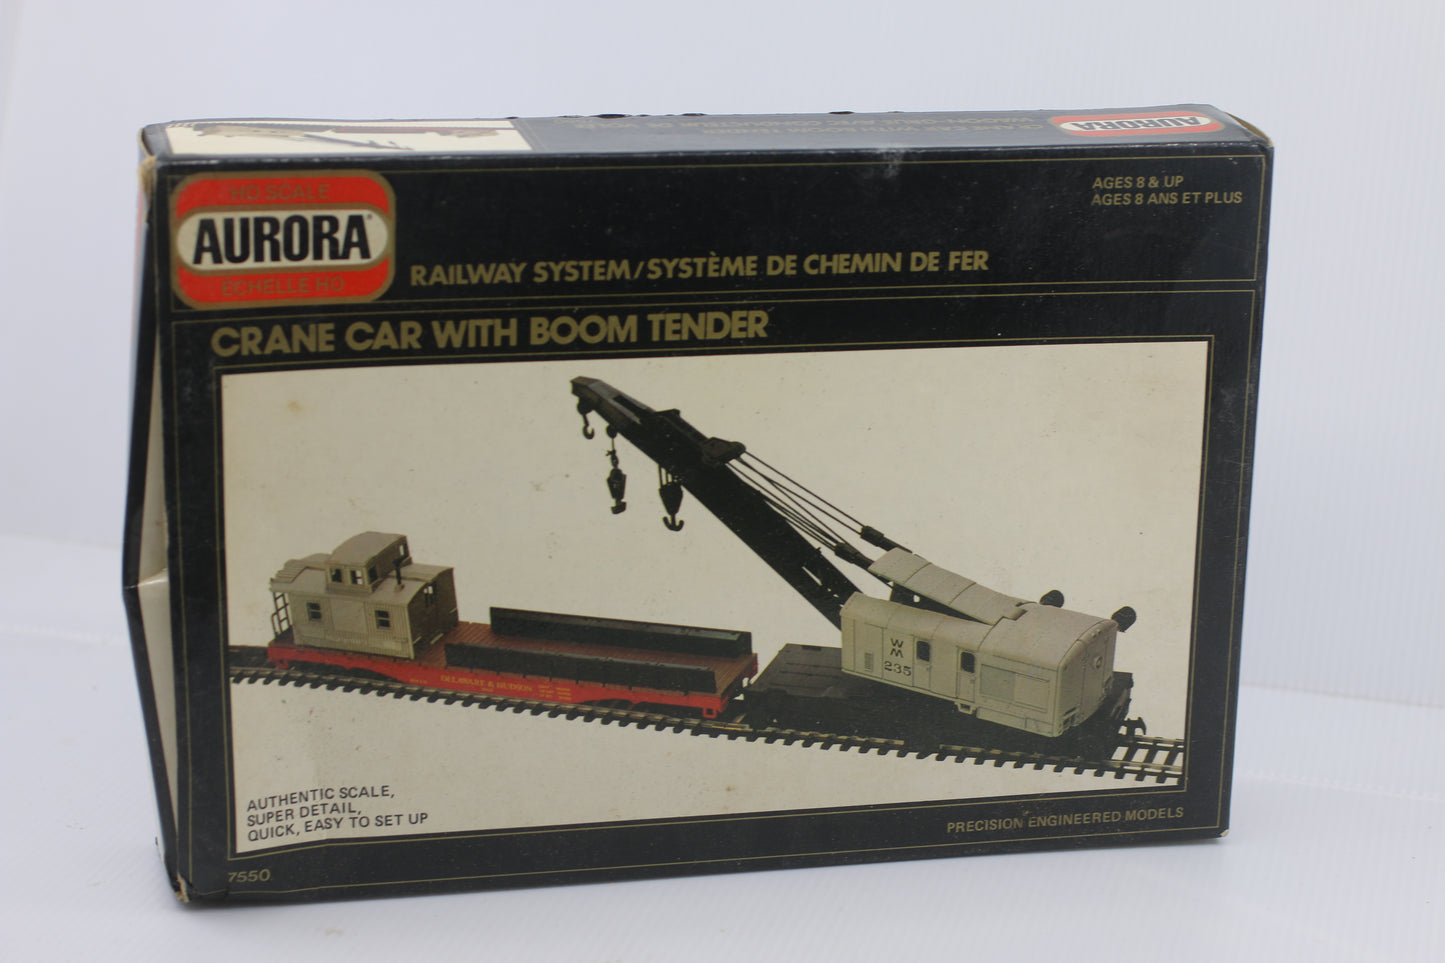 Aurora railway system crane car with boom tender #7550 HO SCALE